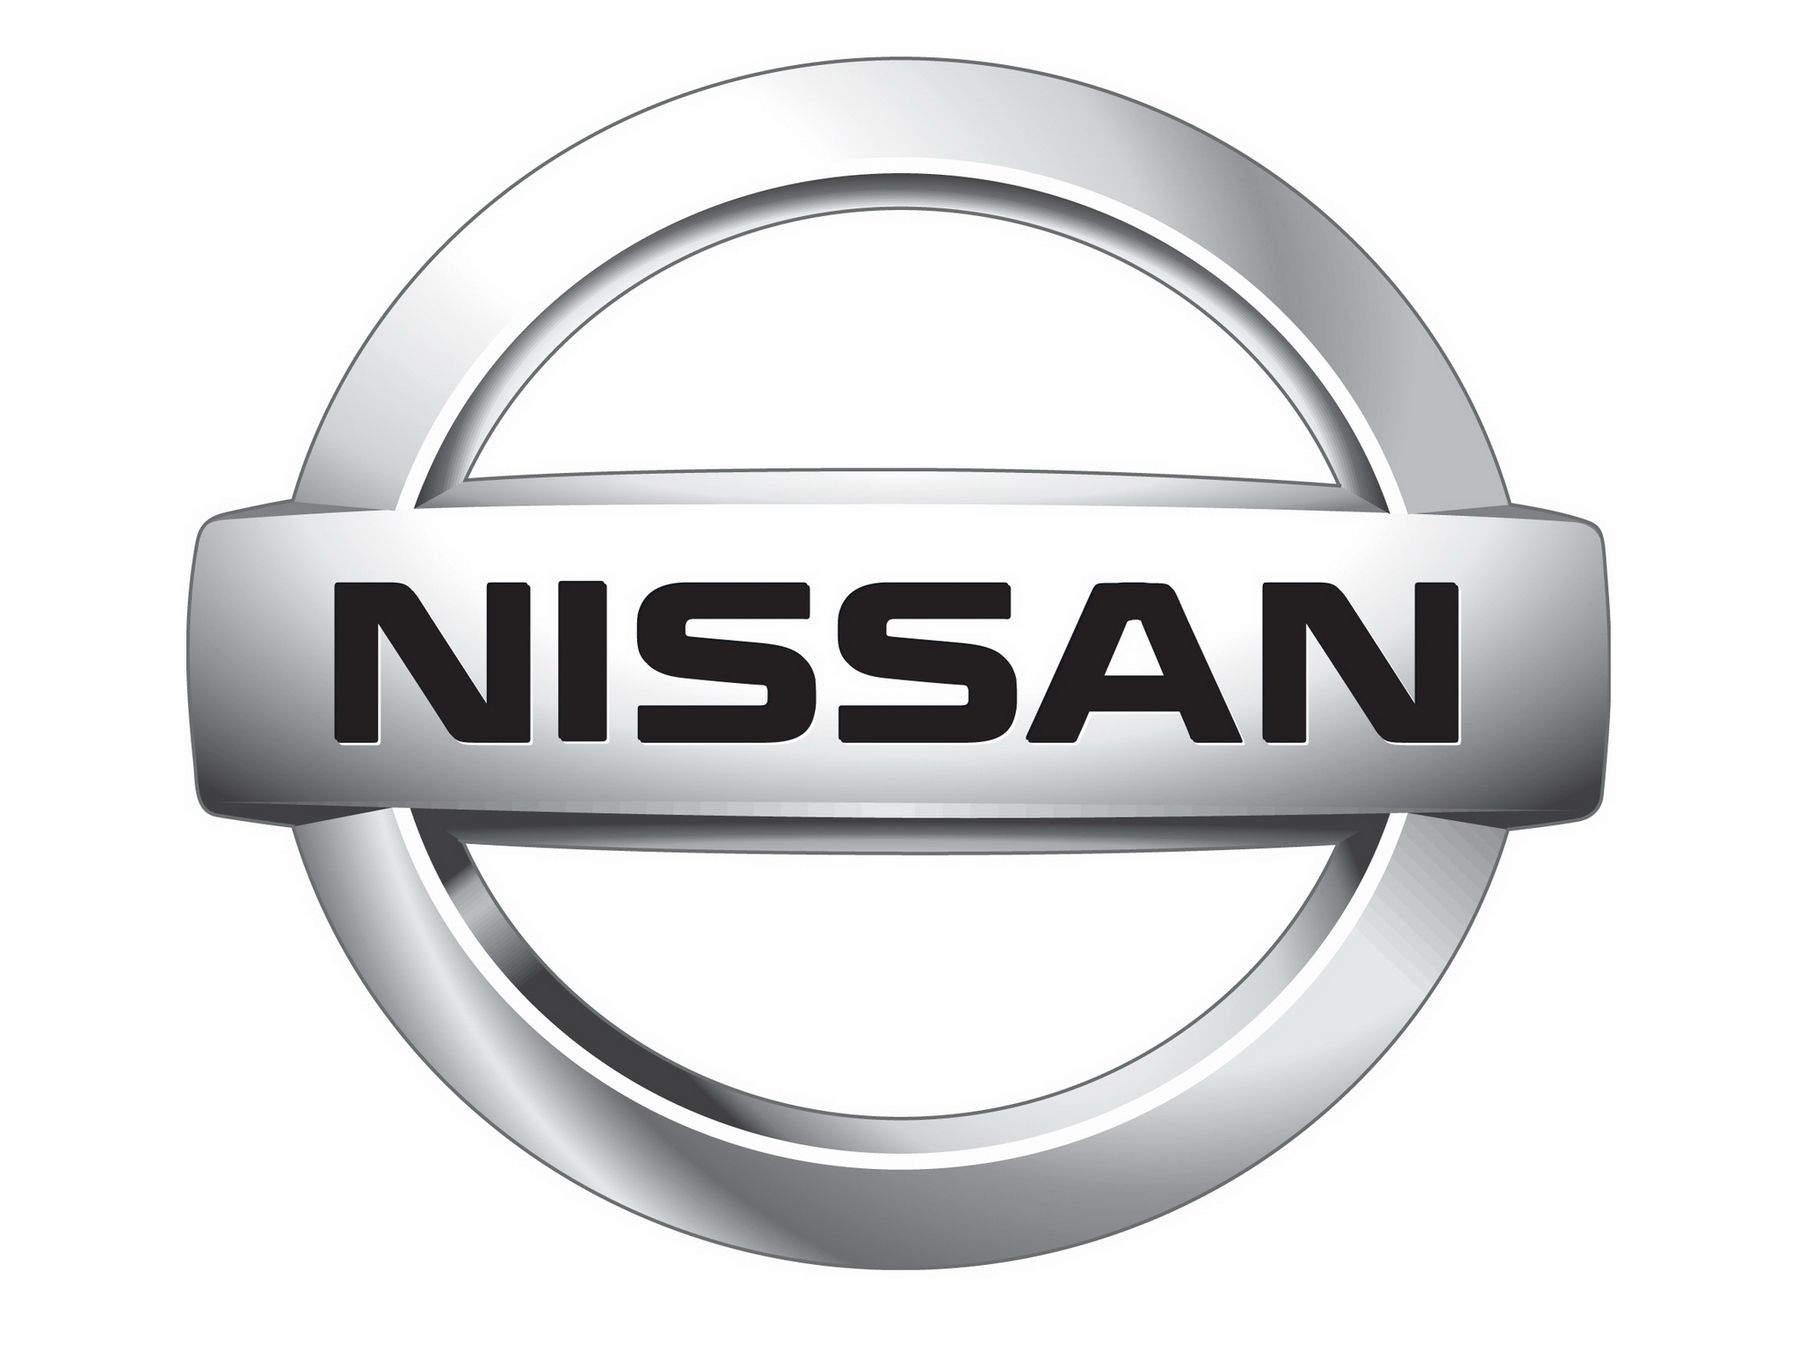 Логотип Nissan